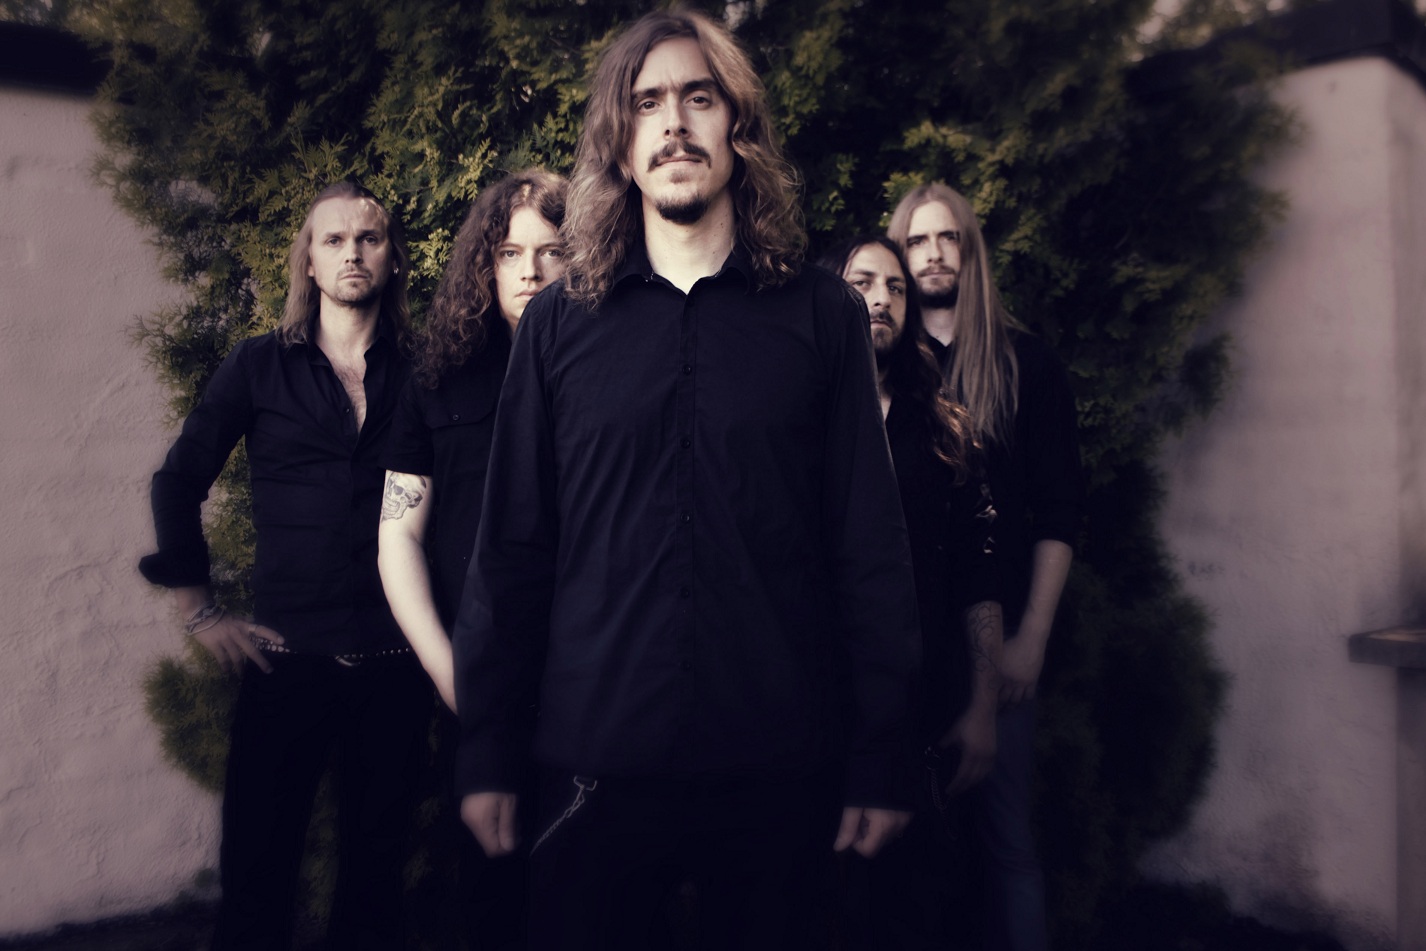 Fredrik Åkesson of Opeth